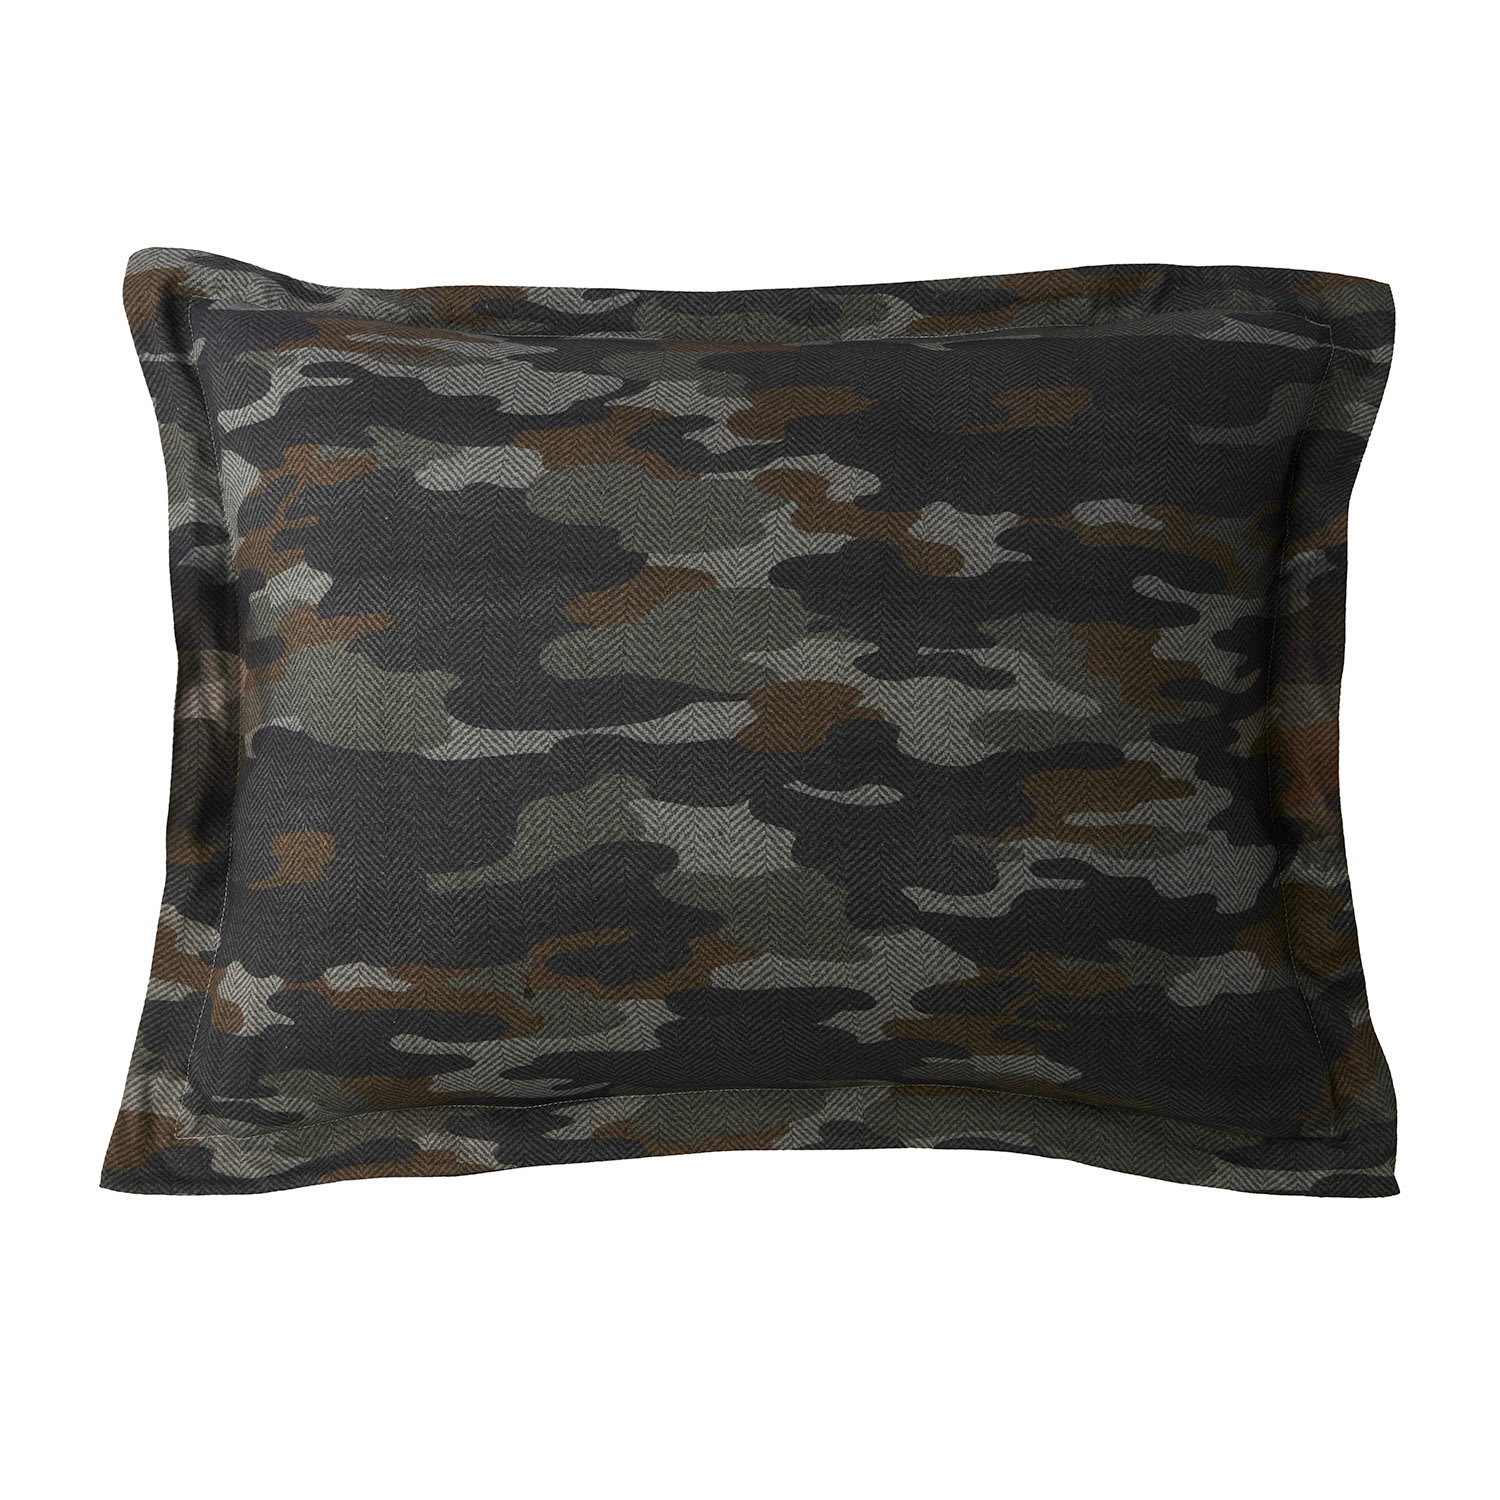 Camouflage Jersey Knit Sham - Multi